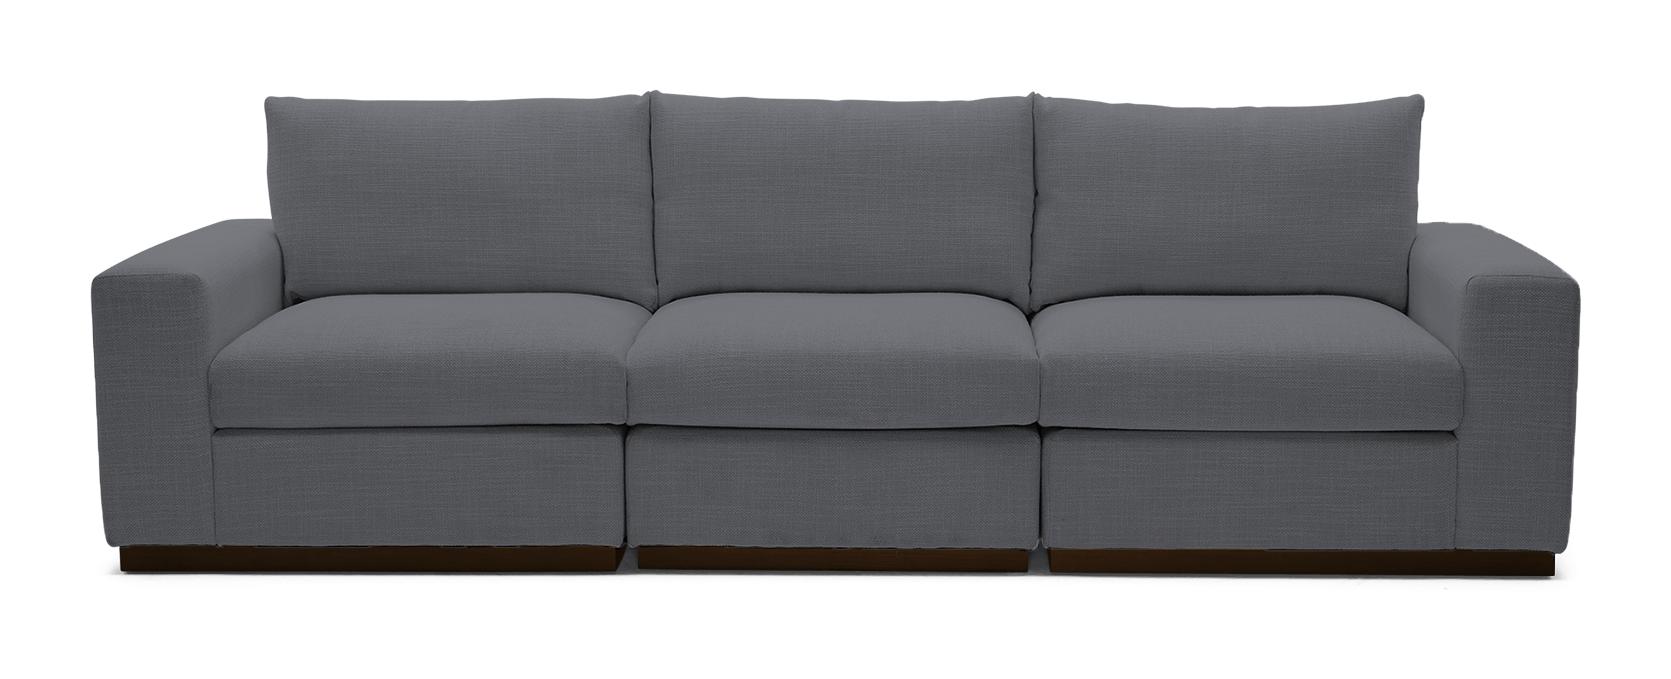 holt petite modular sofa essence ash